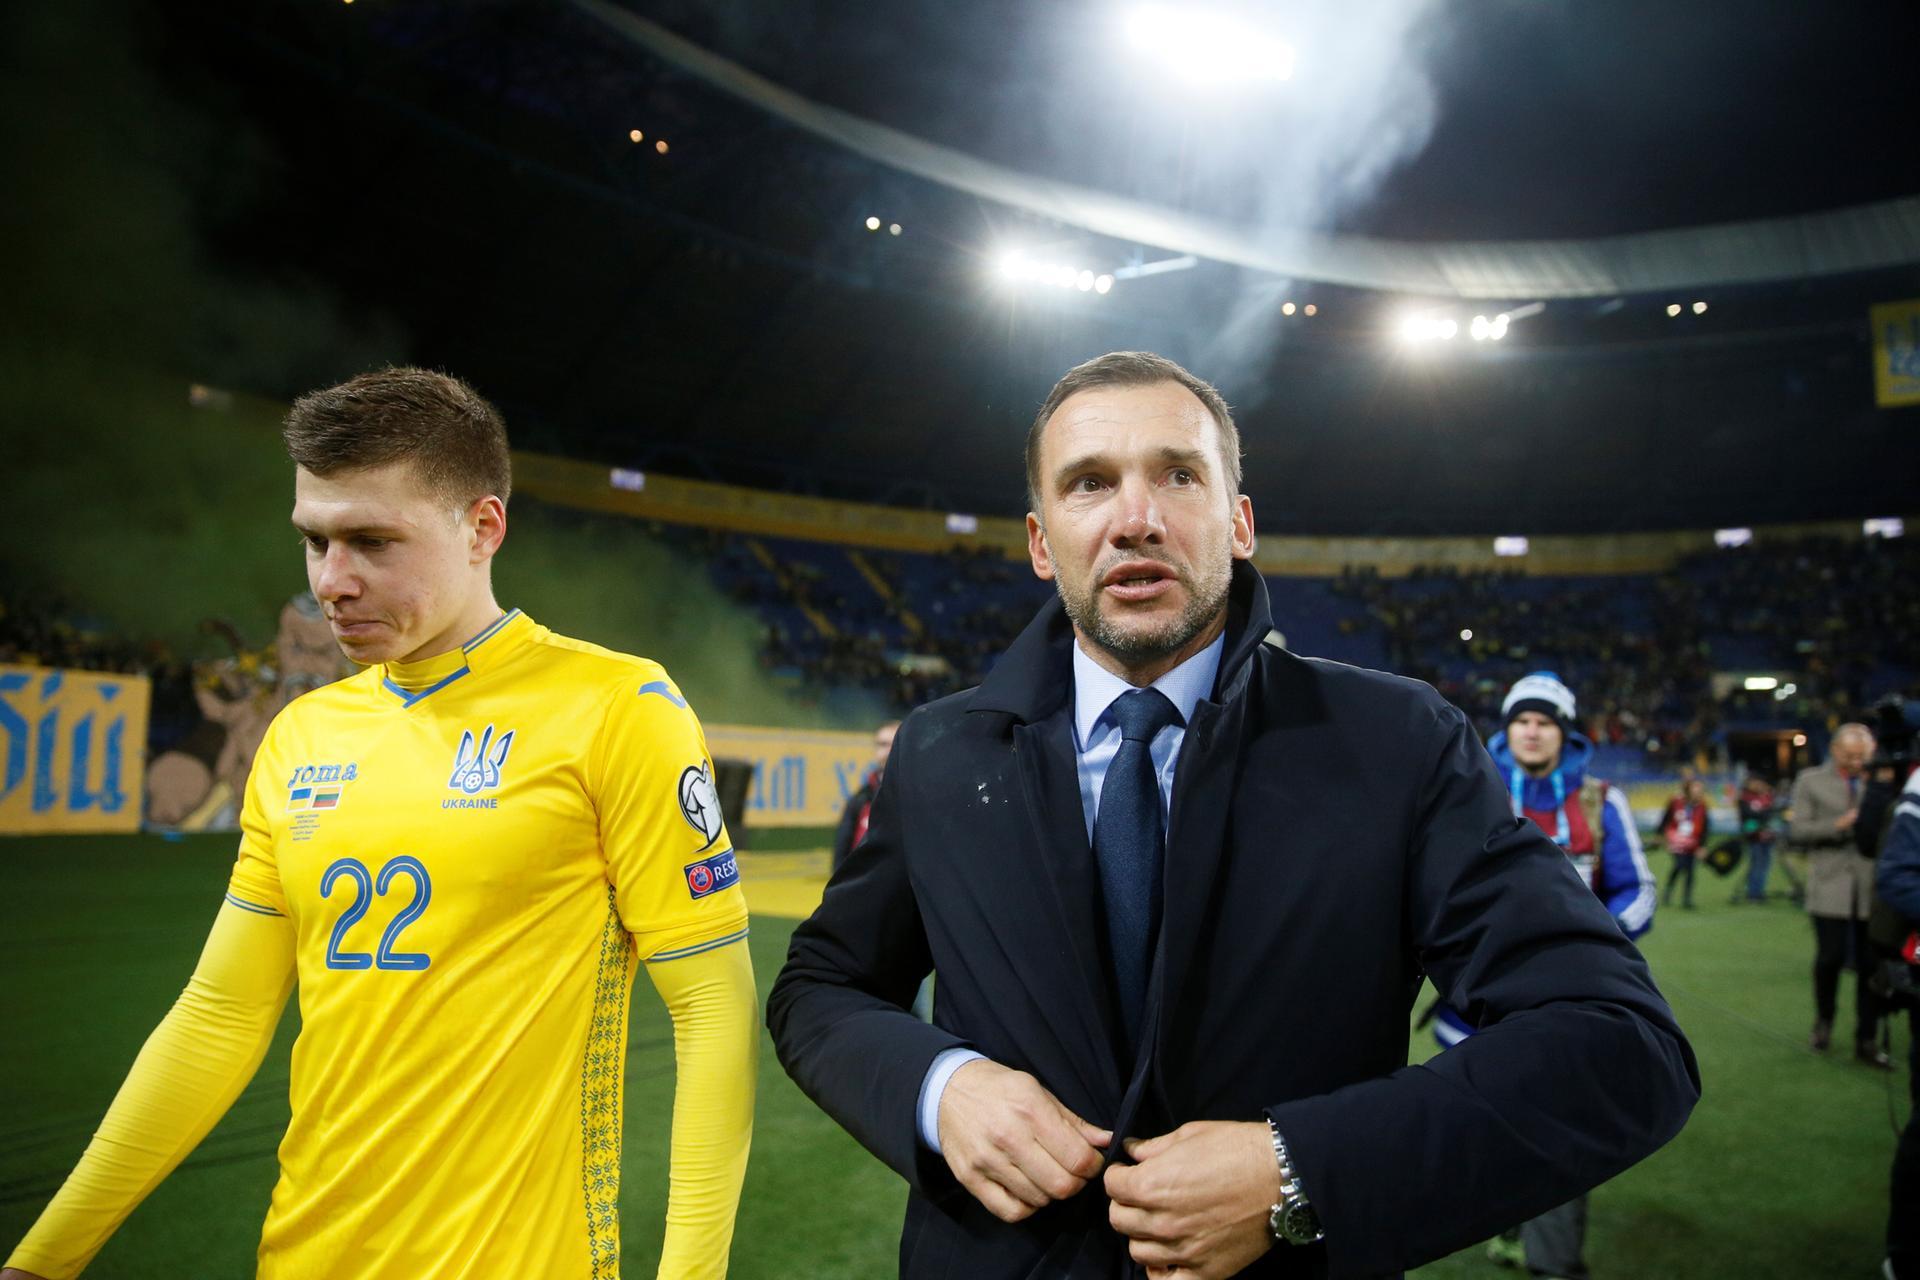 Can Shevchenko bring Euro 2020 glory to Ukraine? - Atlantic Council